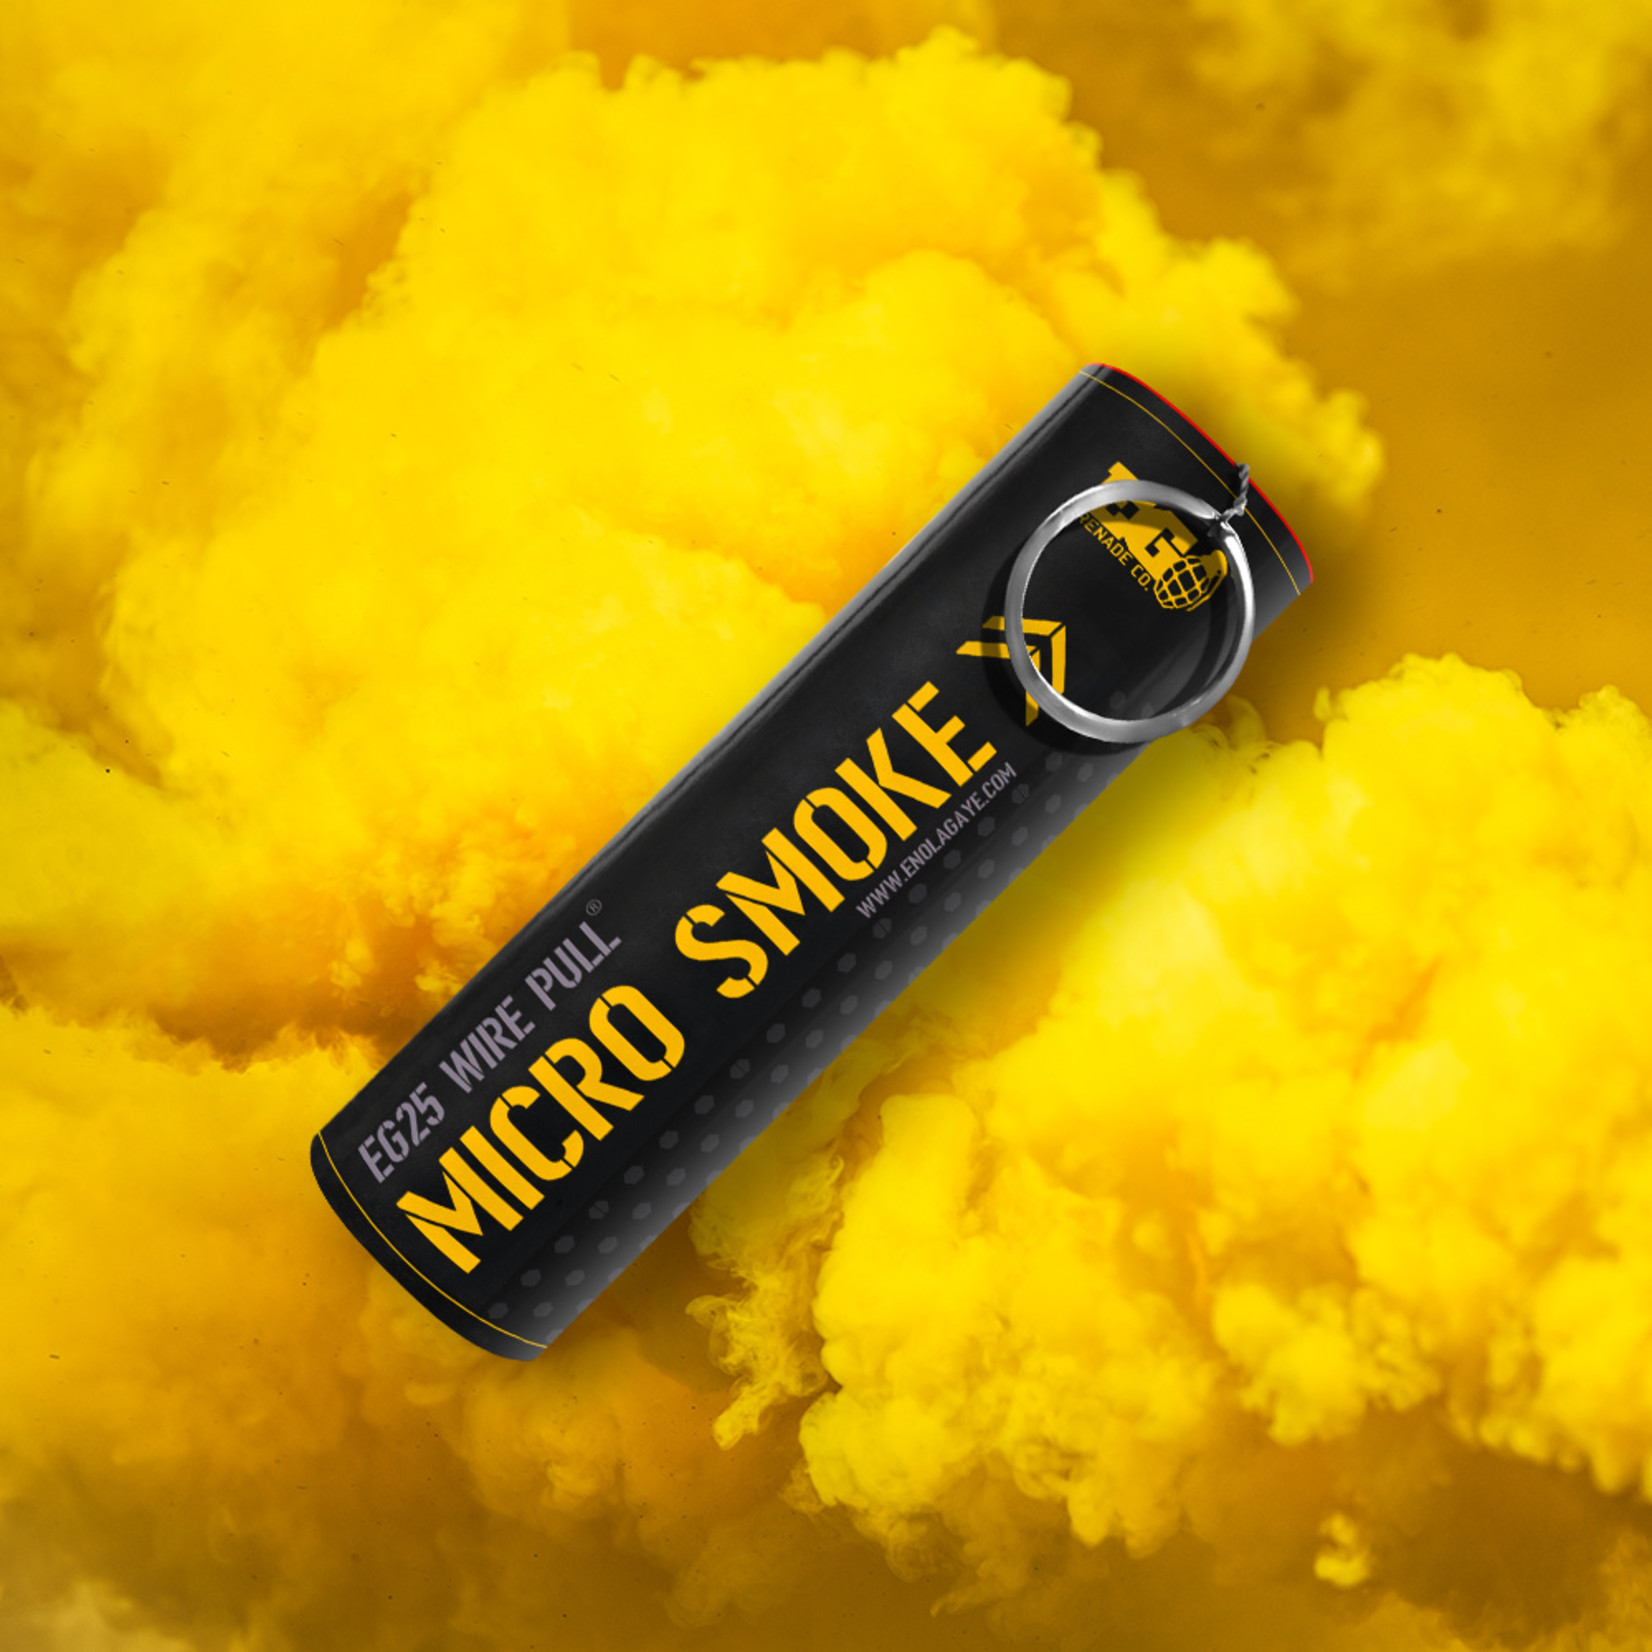 EG25 Micro Smoke Grenade Yellow